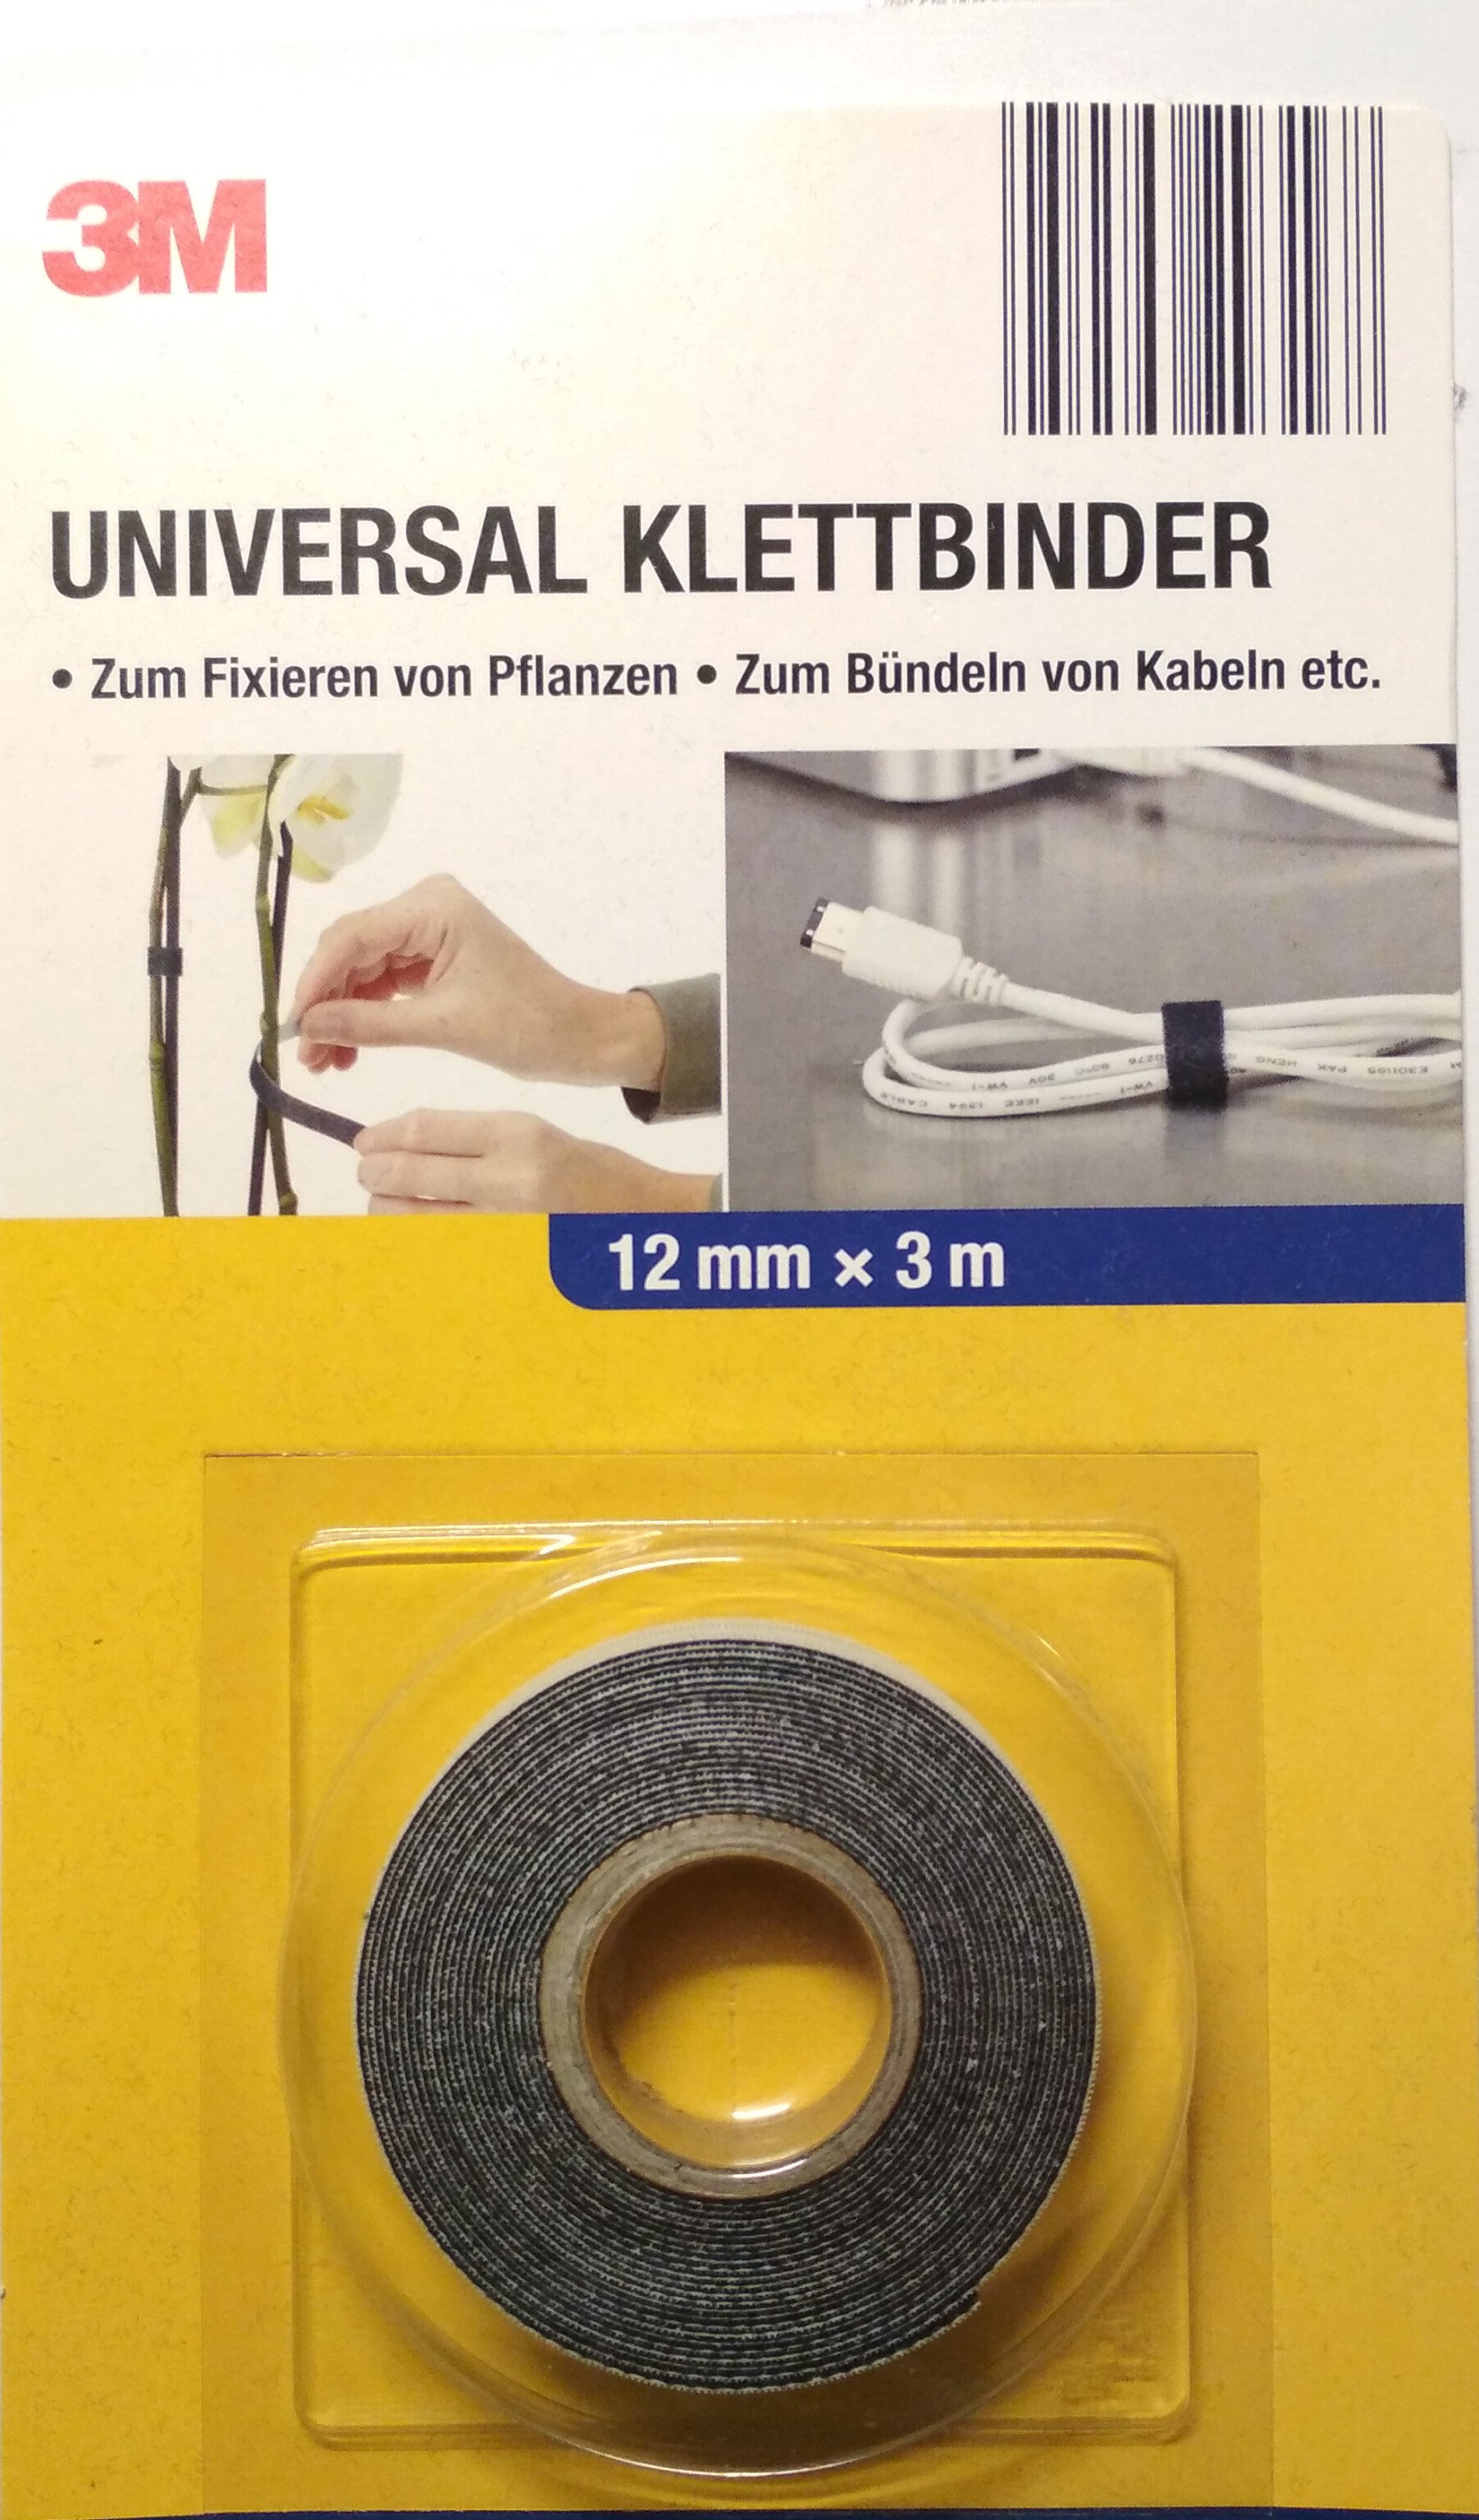 Universal Klettbinder - Product - de